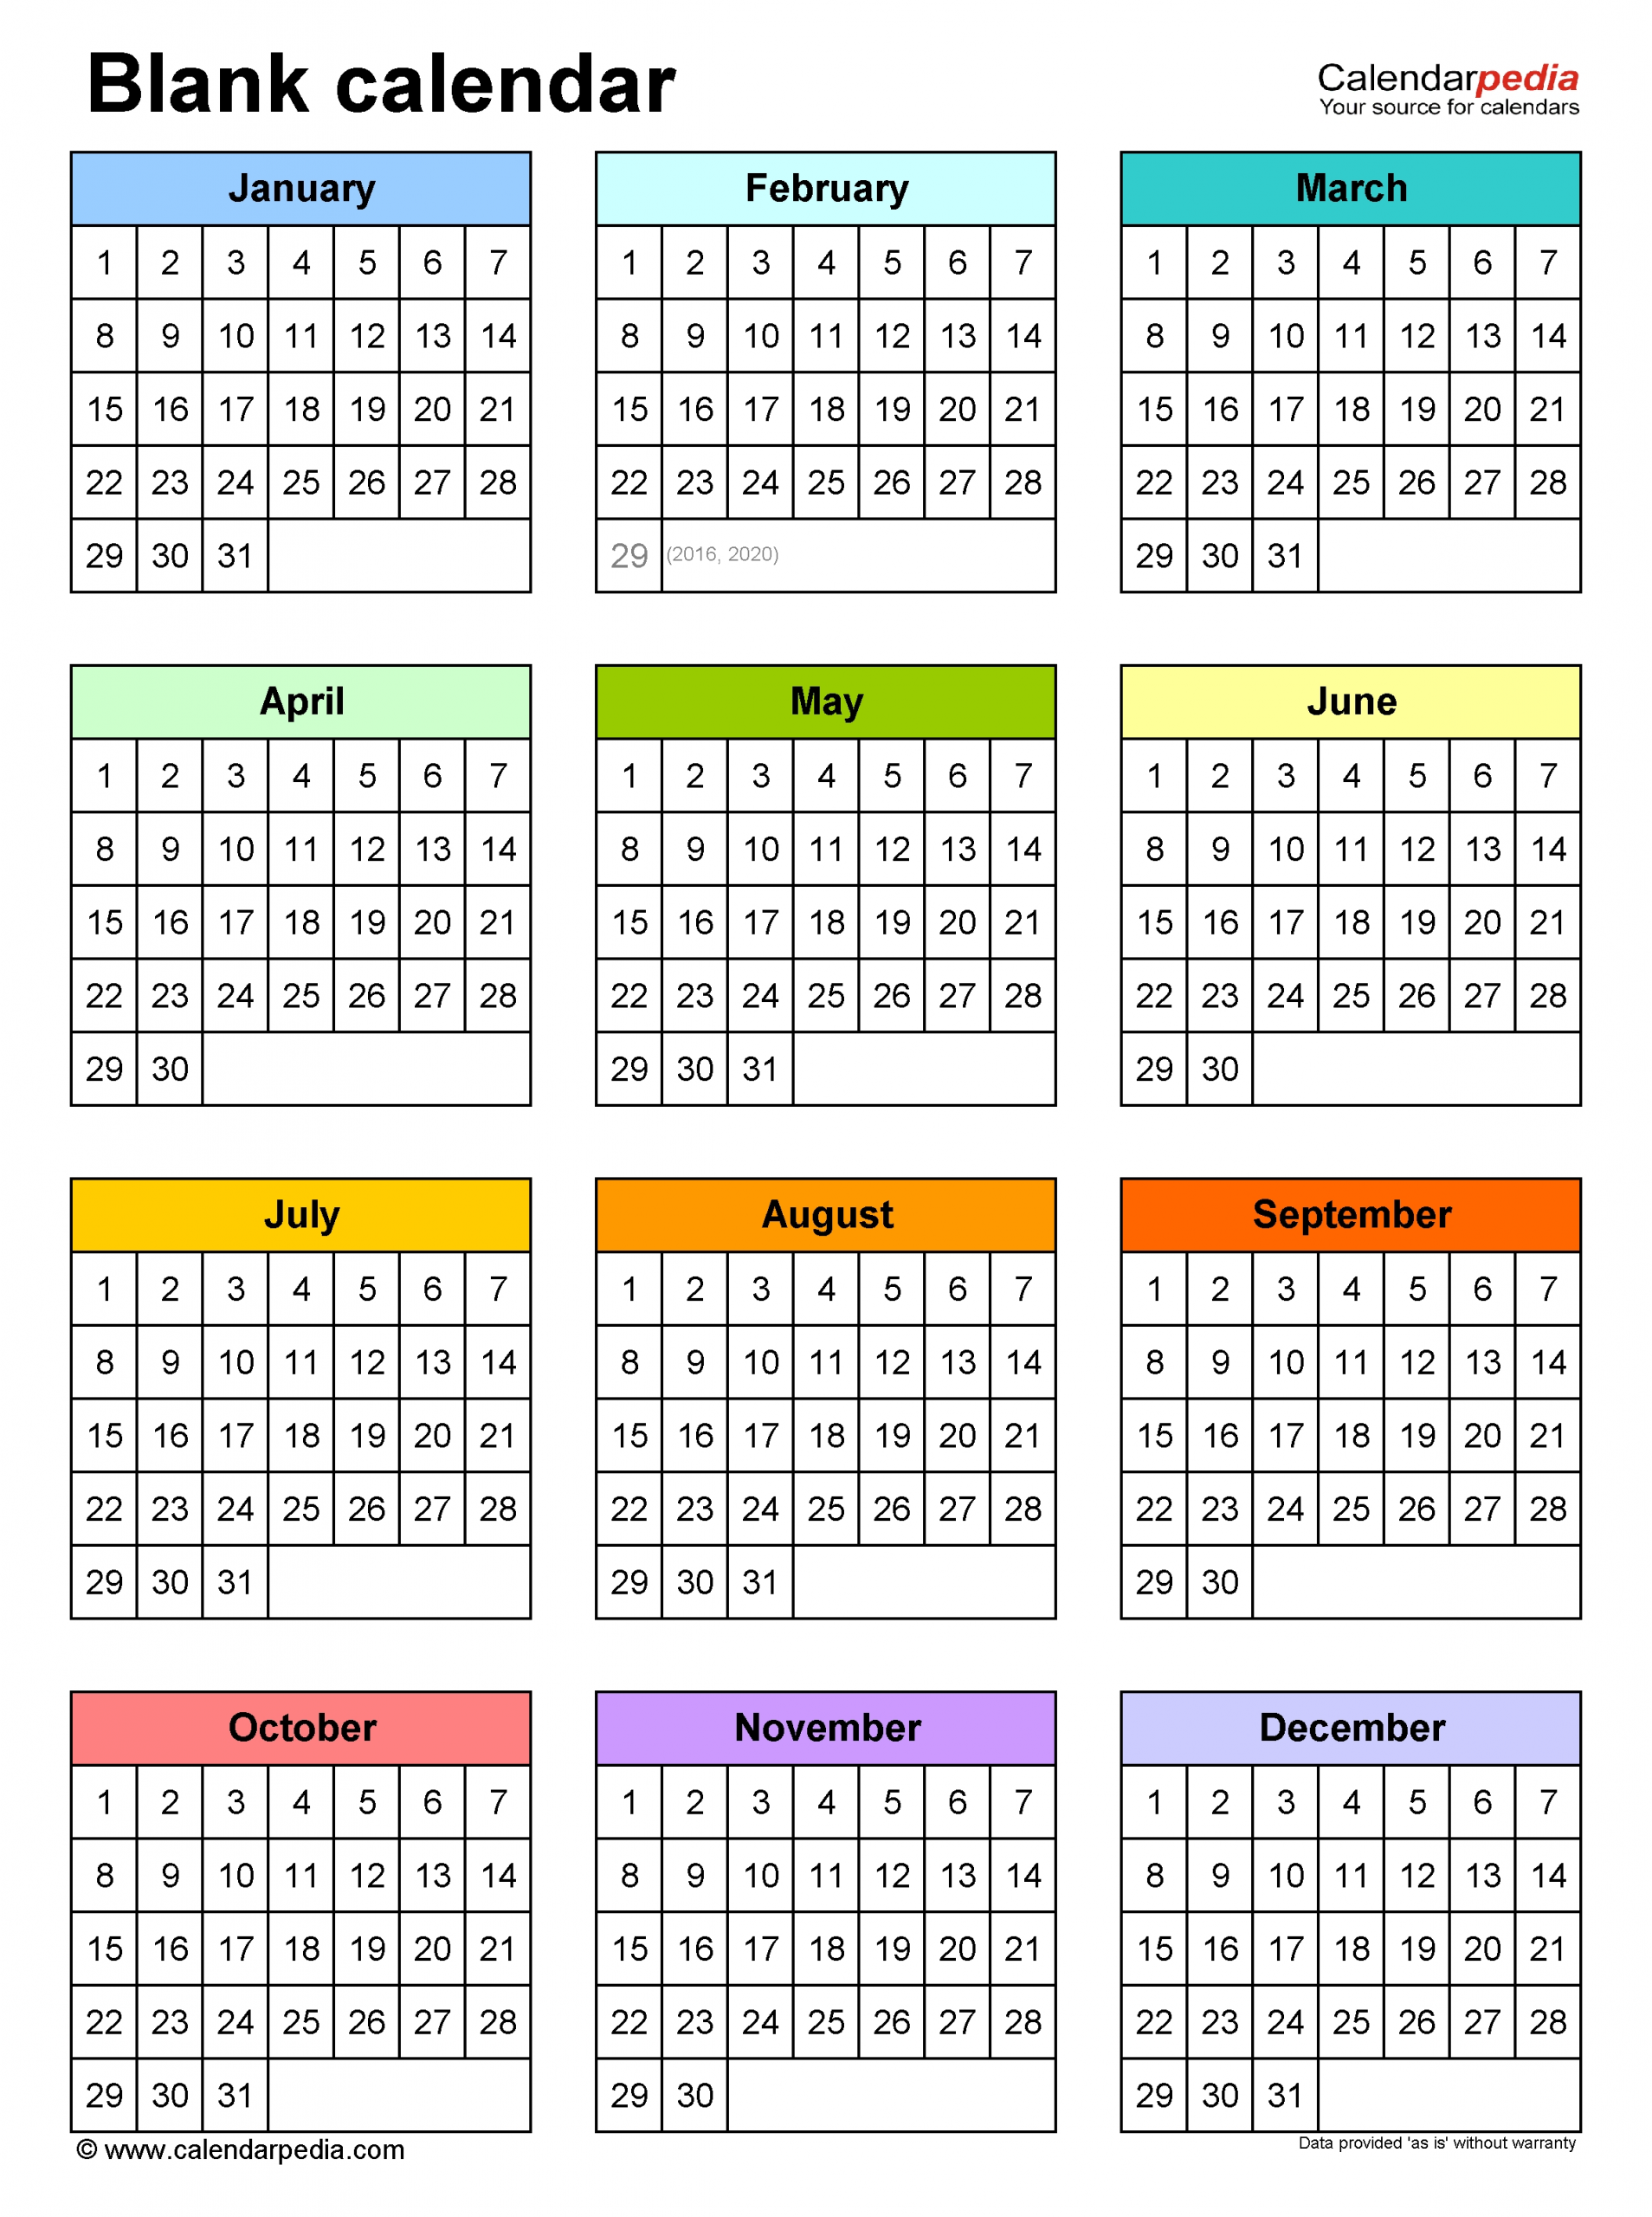 Get 5 Month Blank Calendar